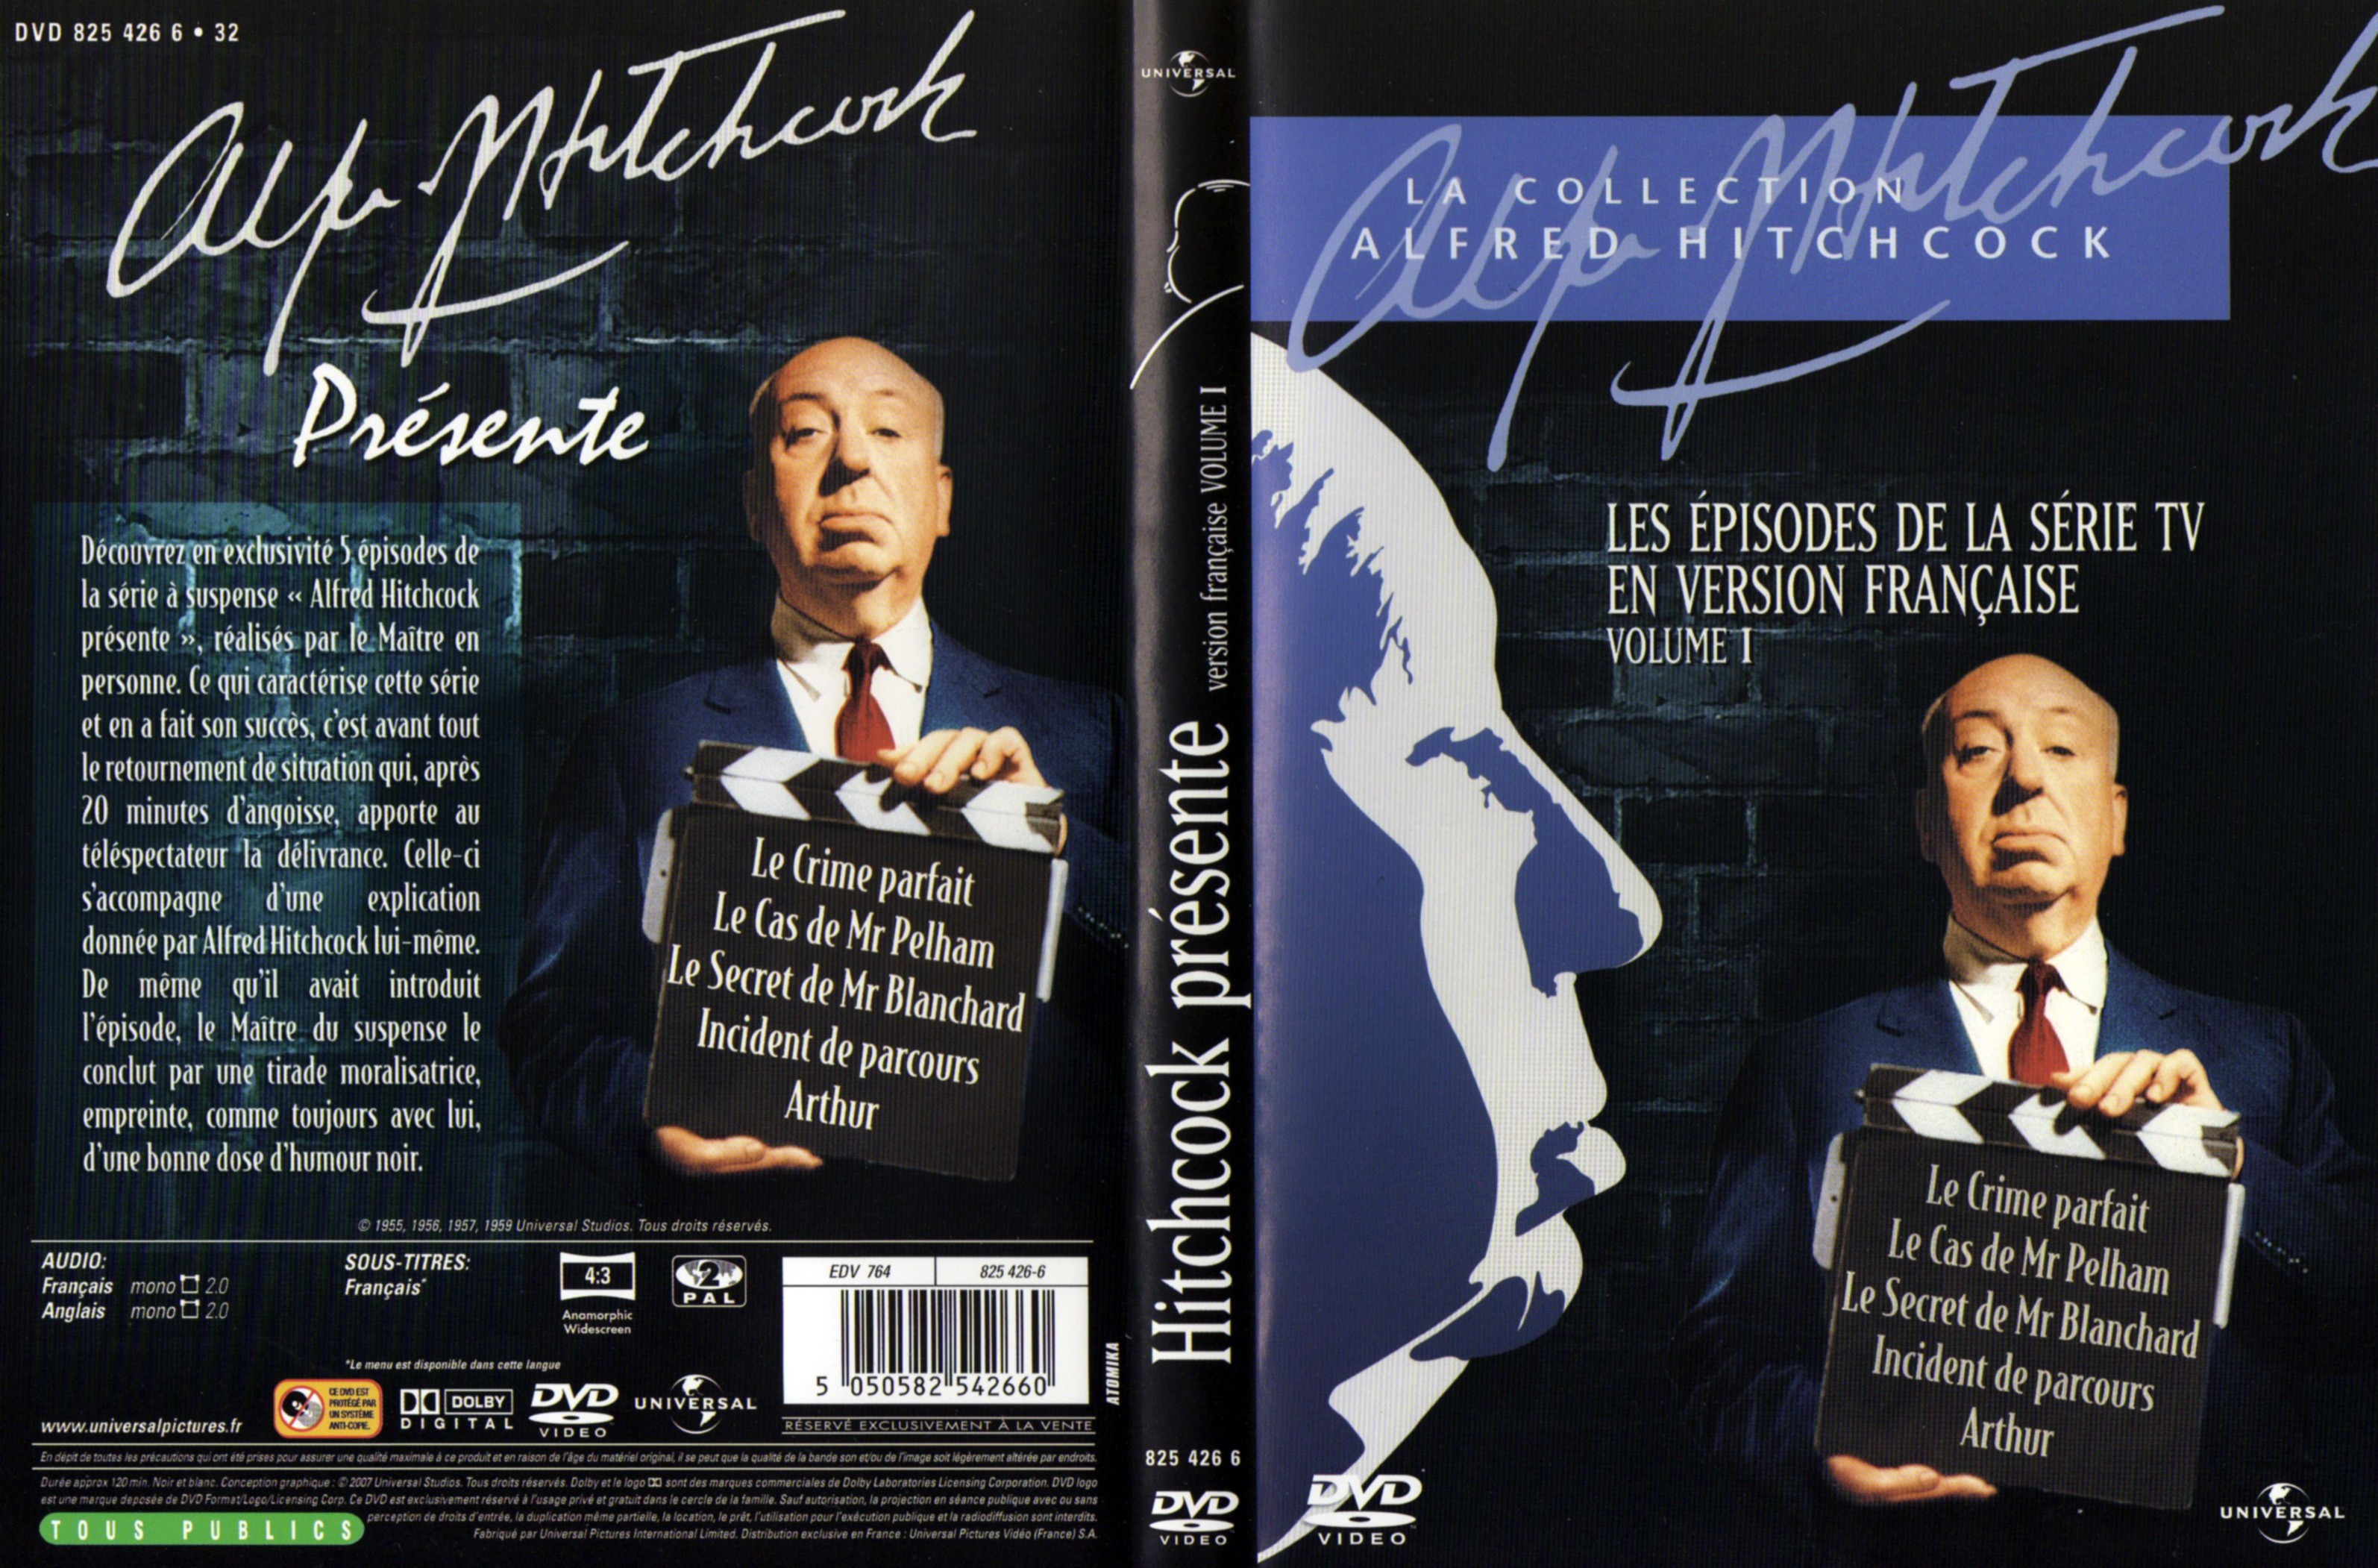 Jaquette DVD Hitchcock prsente vol 01